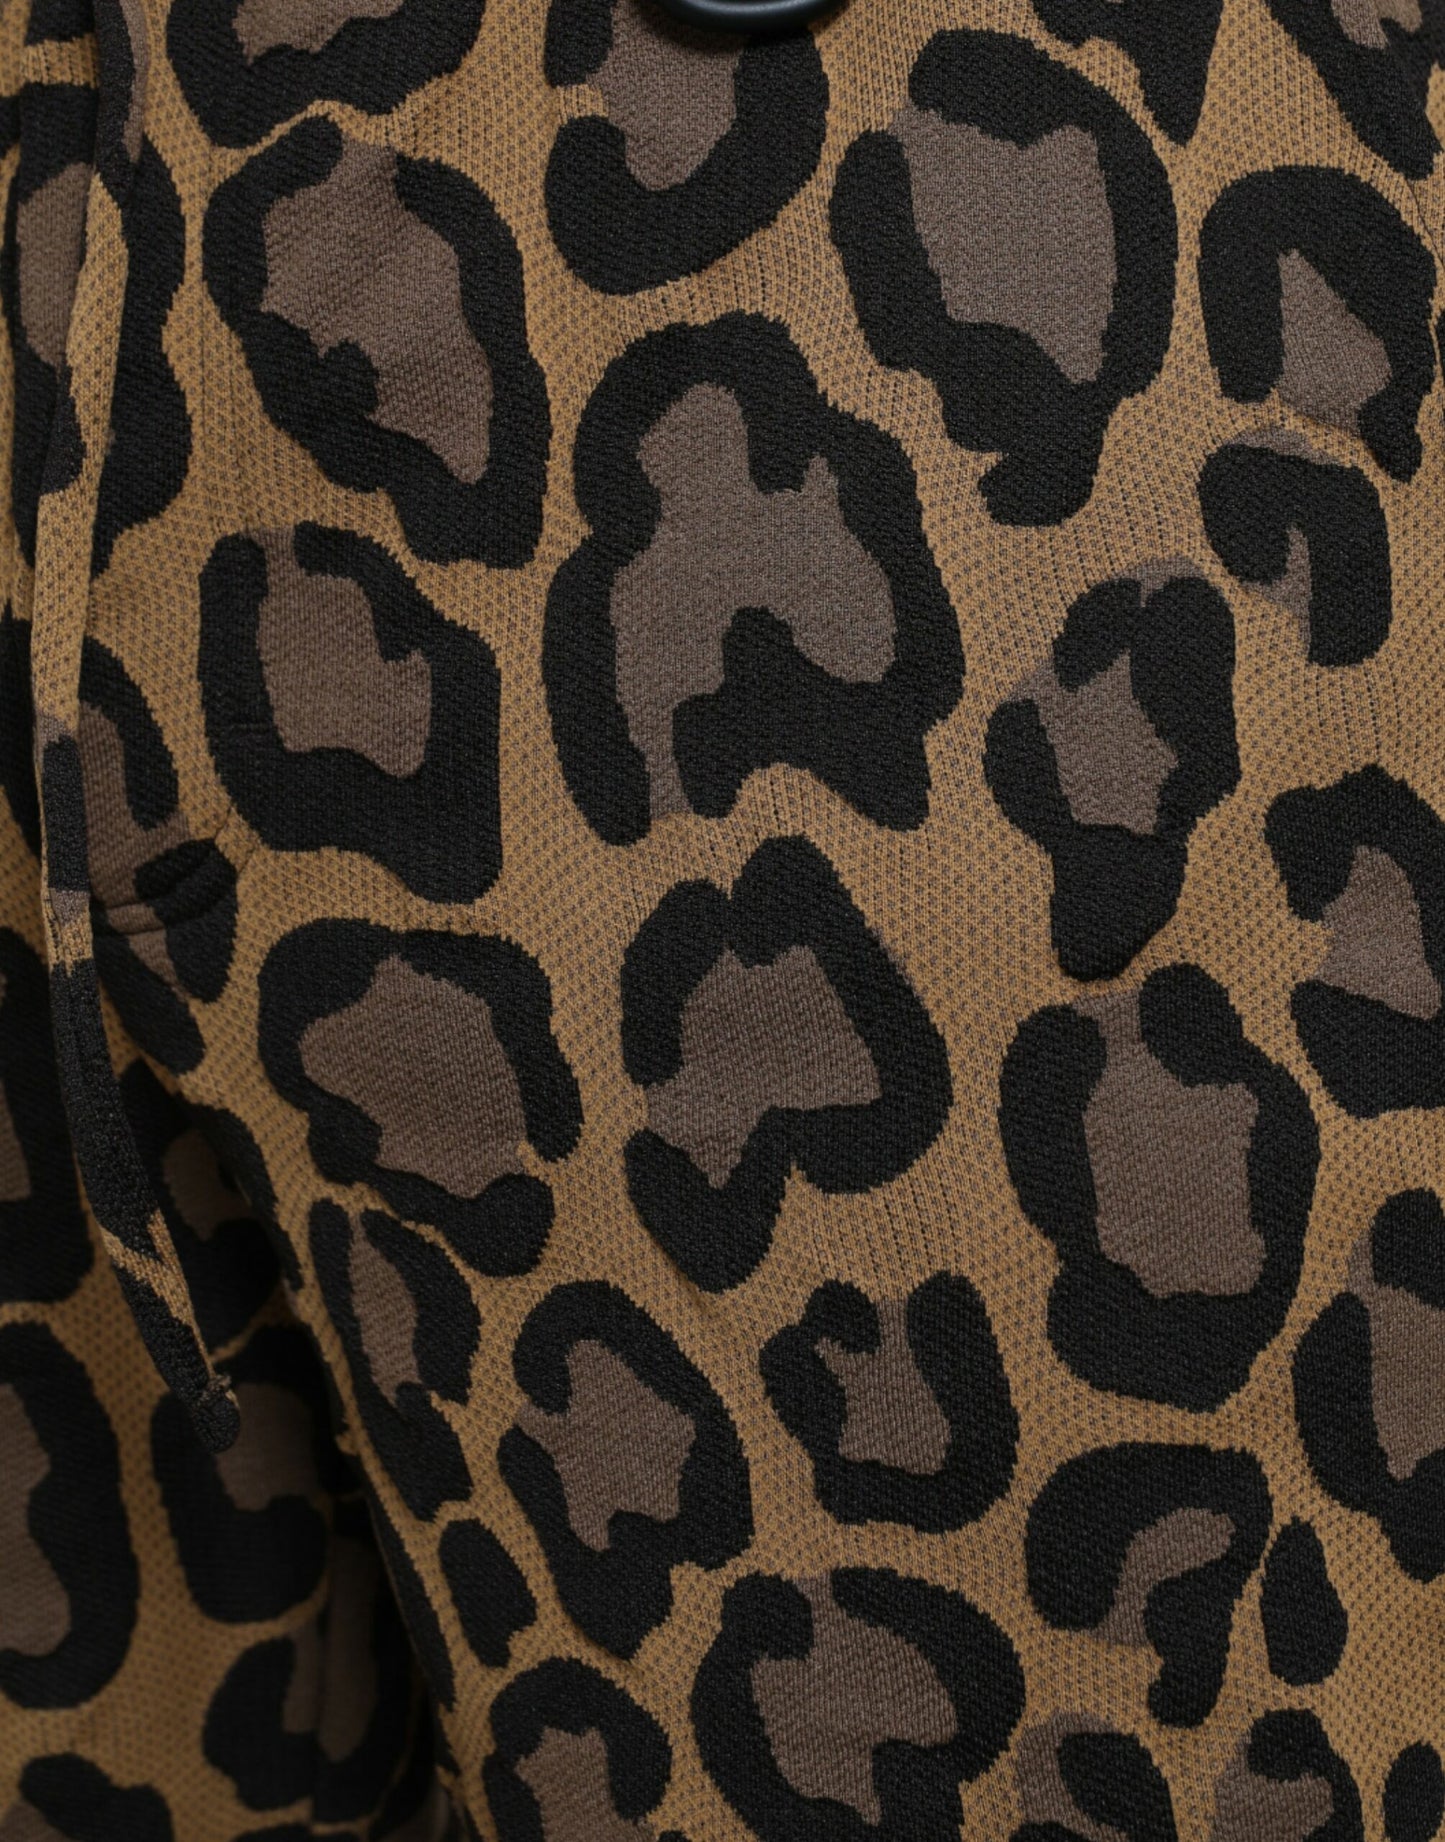 Brown Leopard Print Polyester Jogger Pants